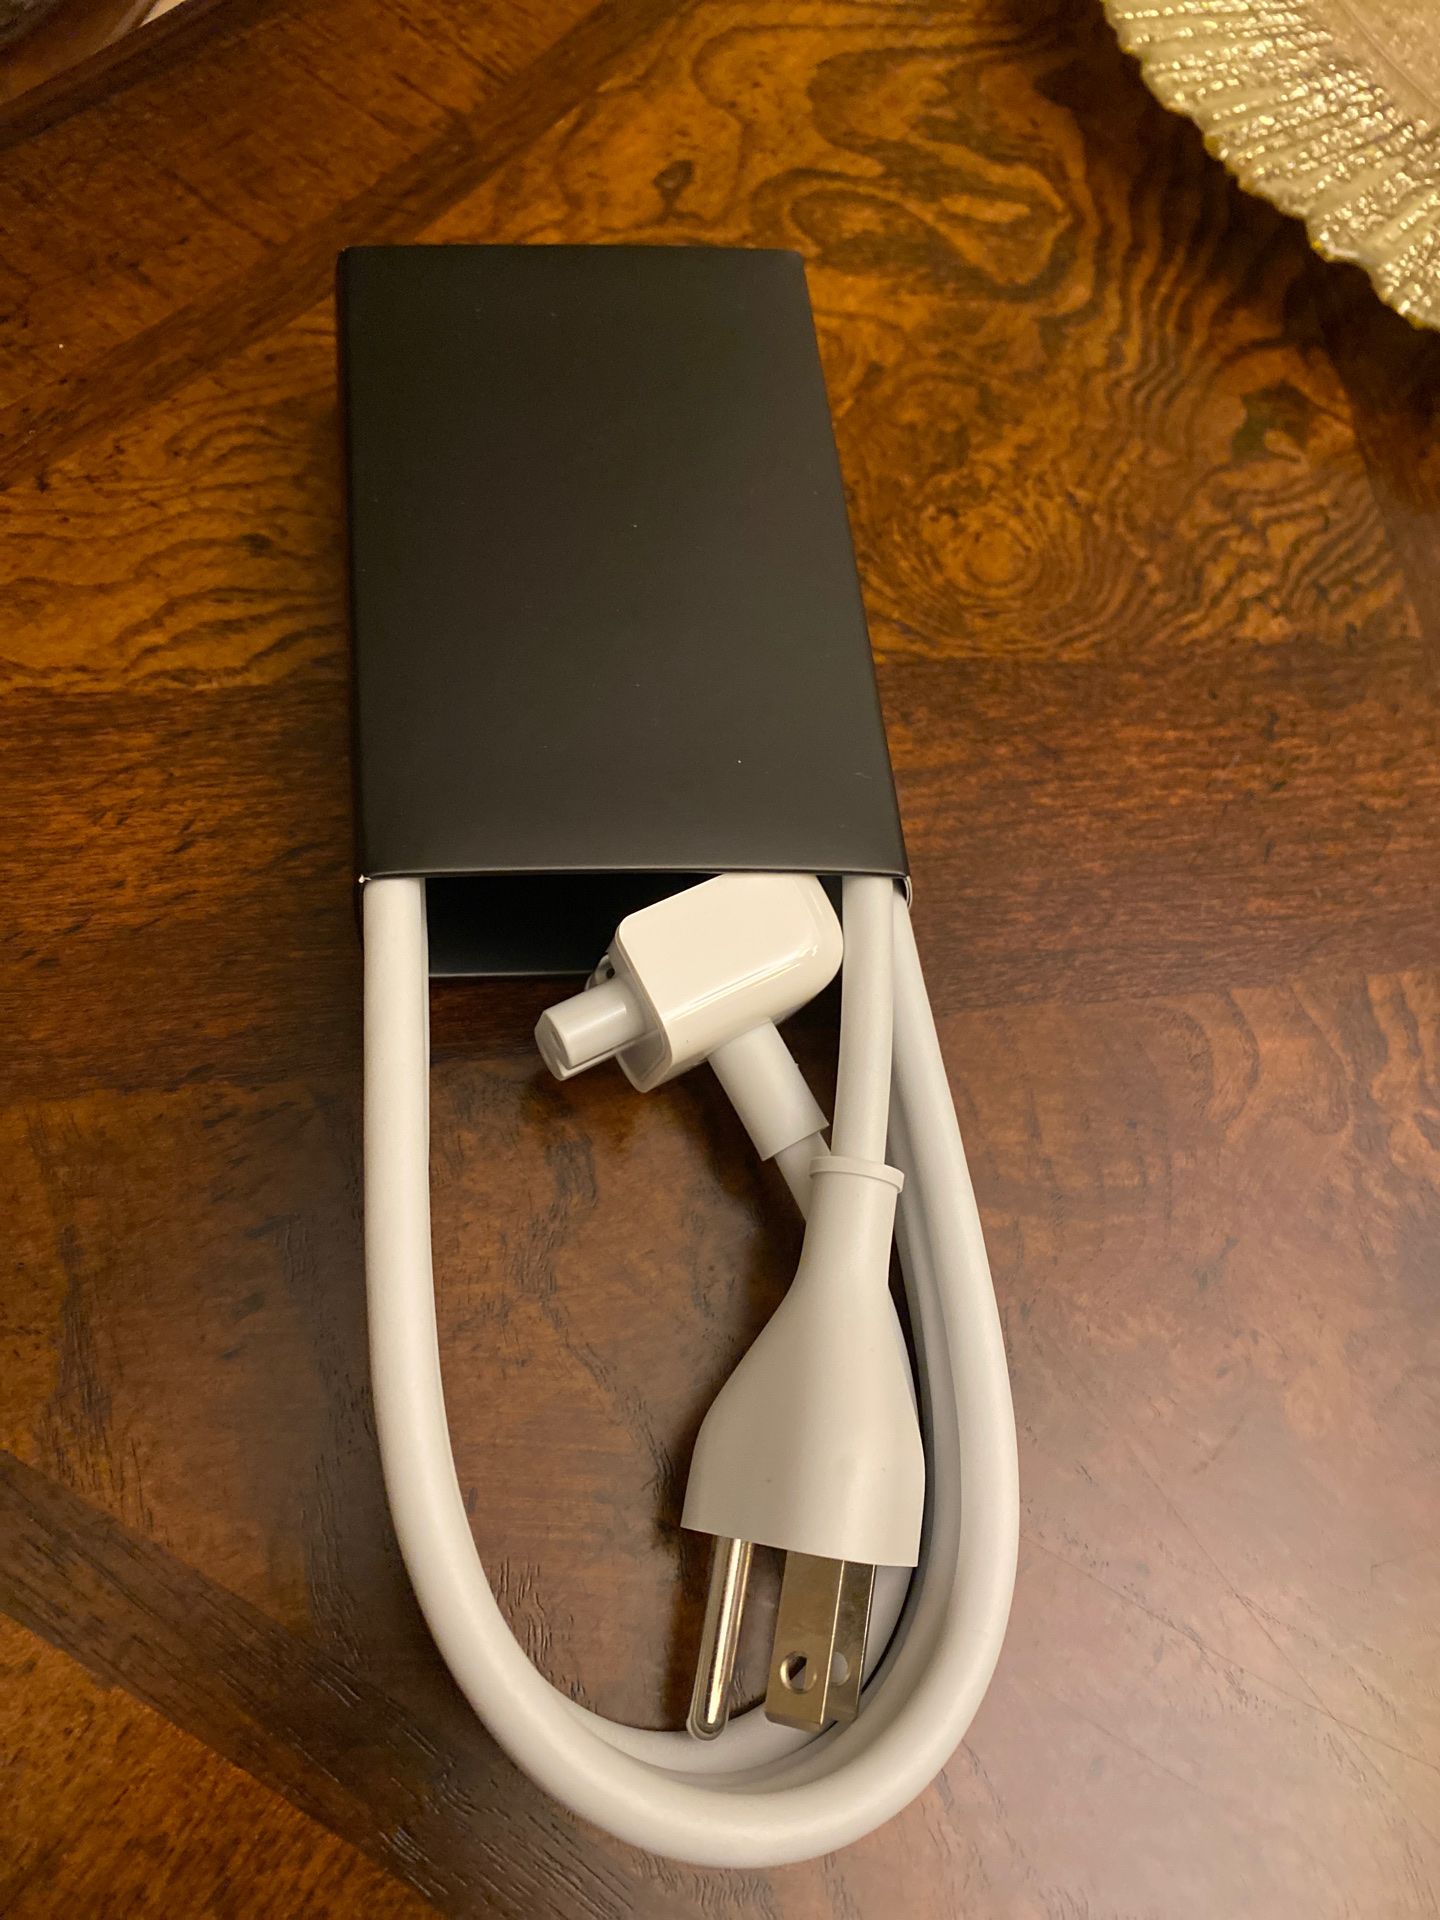 MacBook Pro extension cord